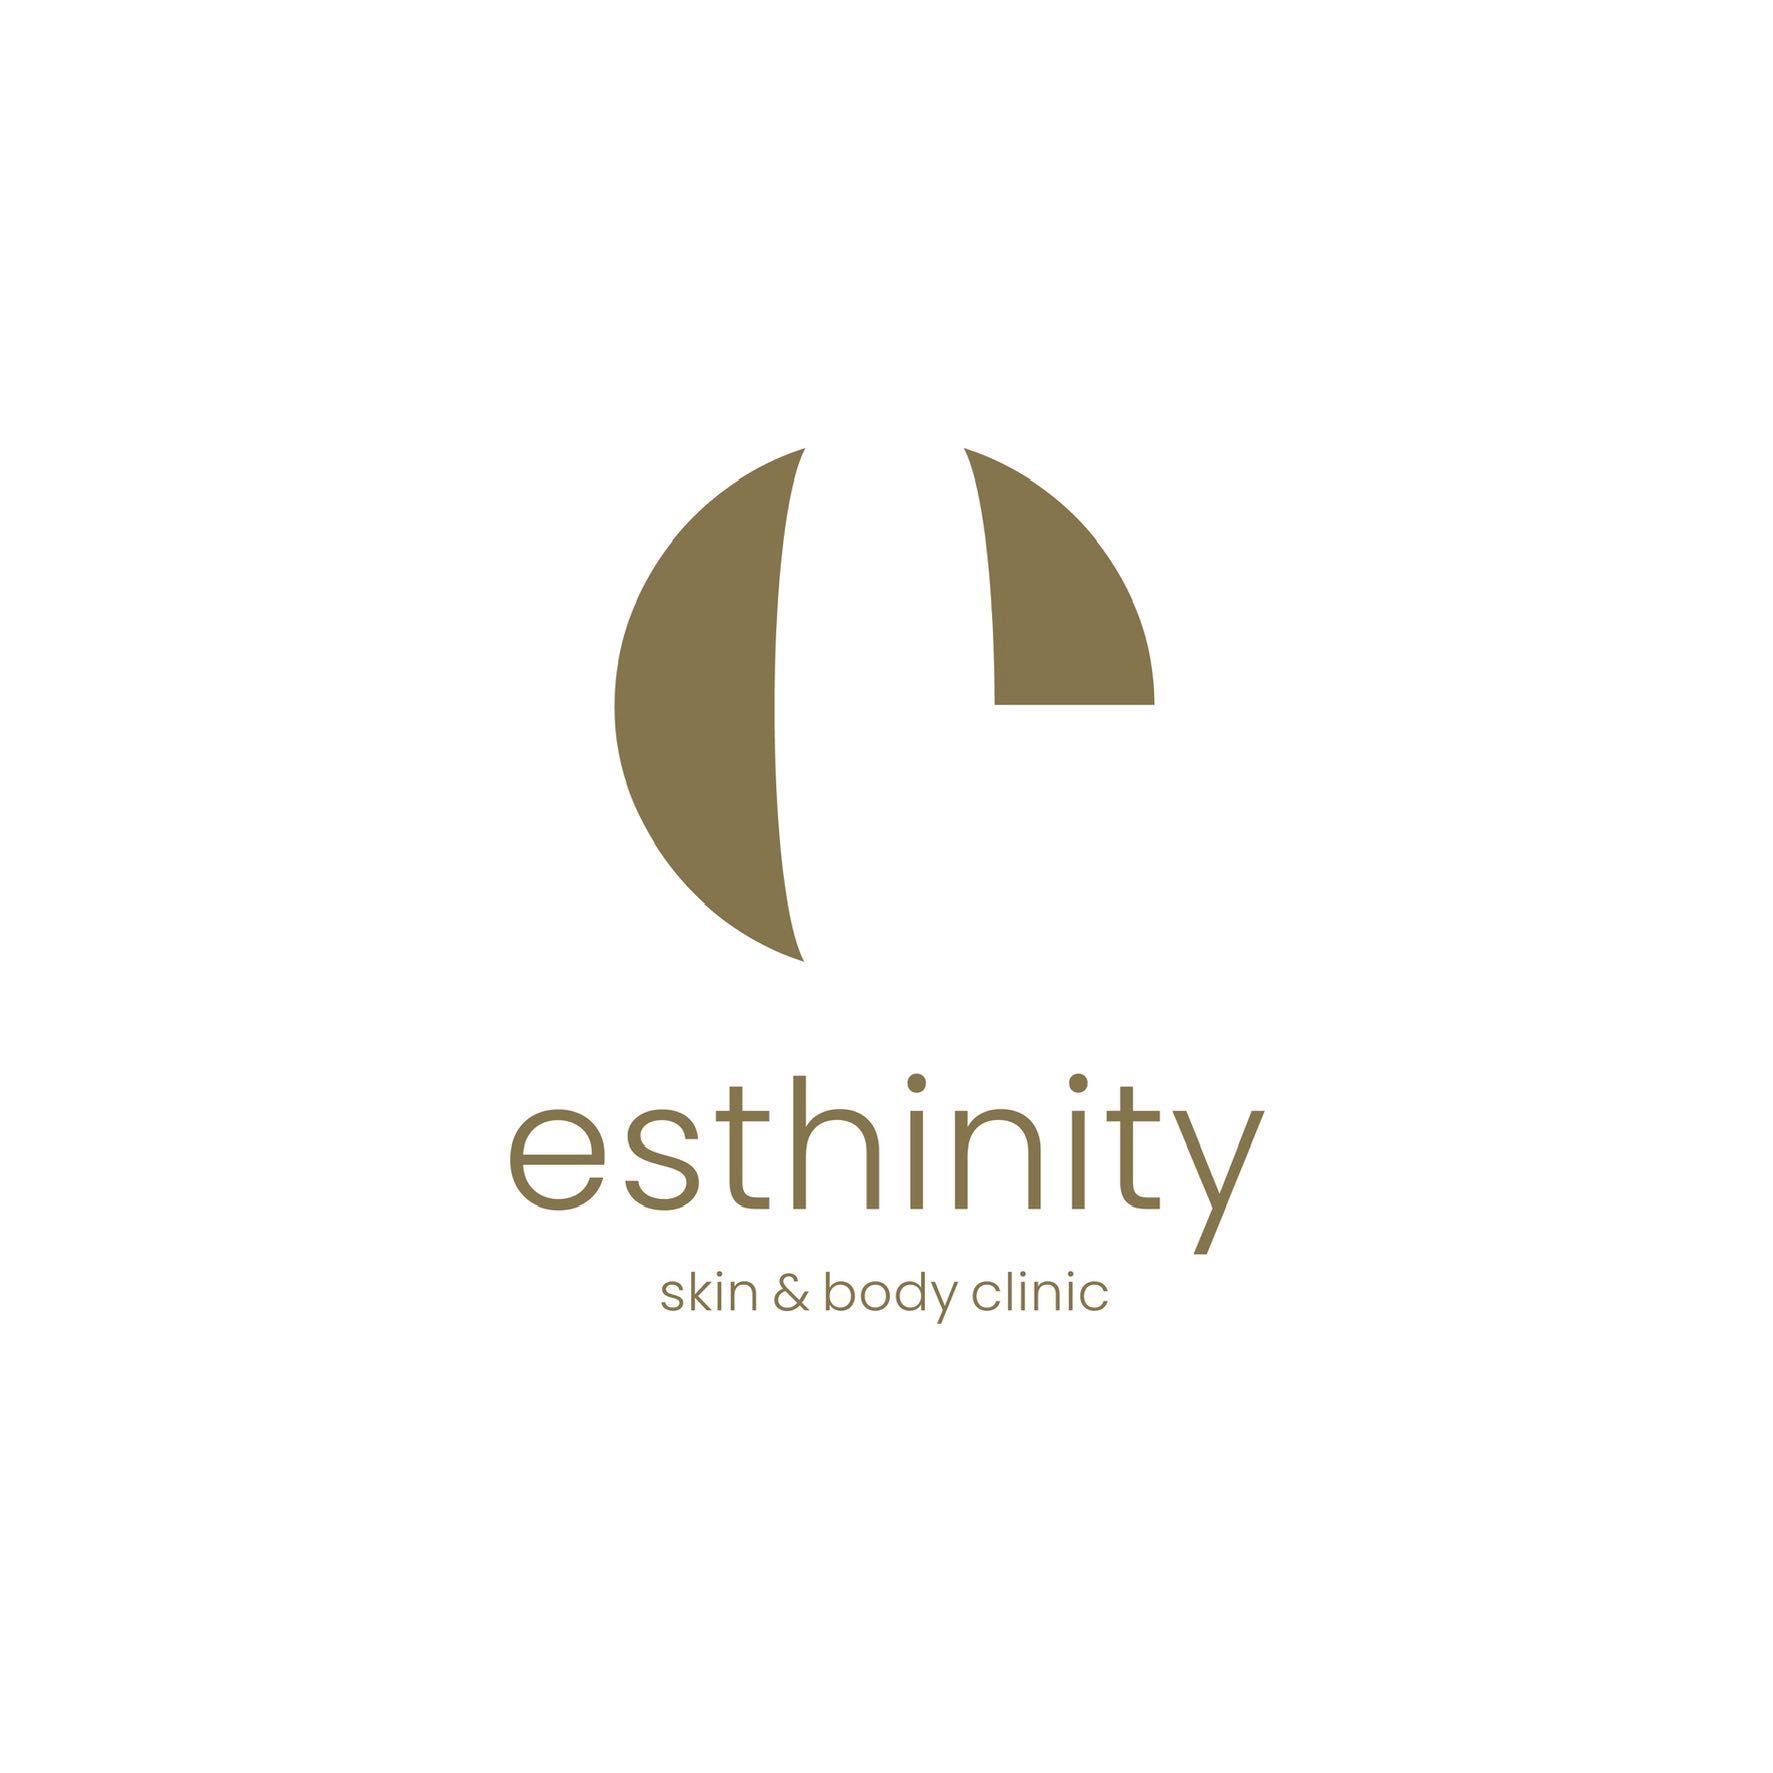 Esthinity Skin & Body ltd, 15 Newton Terrace Lane, Lower ground floor, G3 7PJ, Glasgow